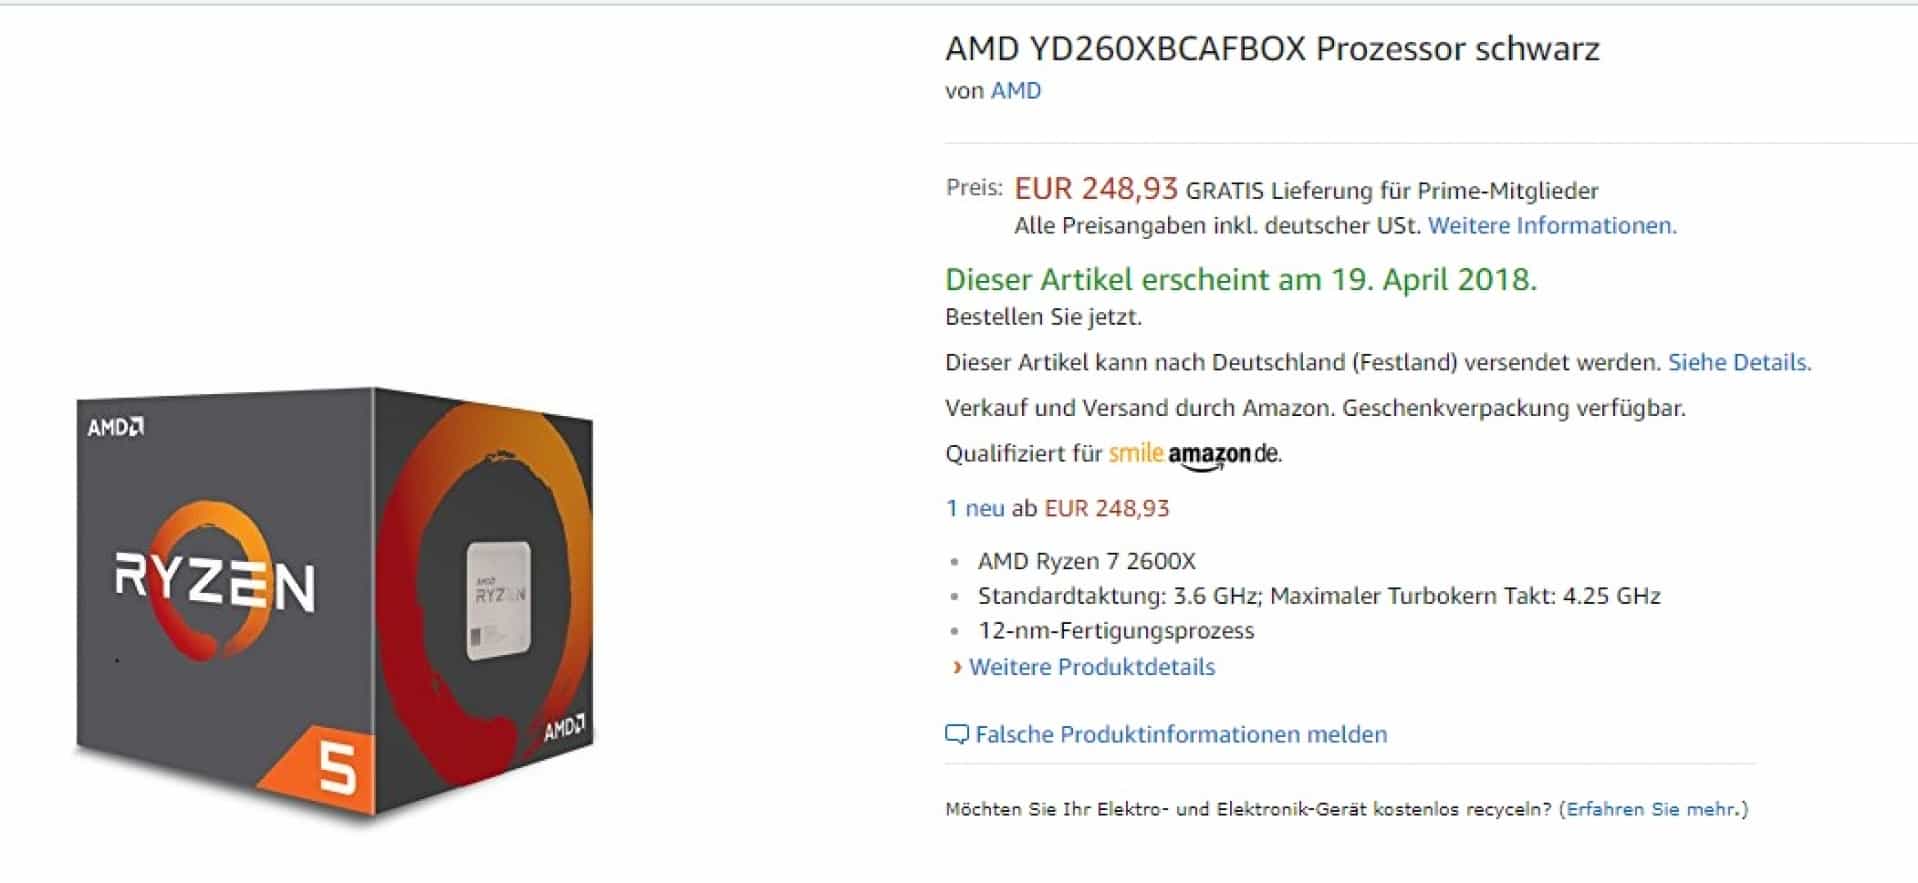 Ryzen 5 2600X amazon - La nuova CPU Ryzen 5 2600X su Amazon